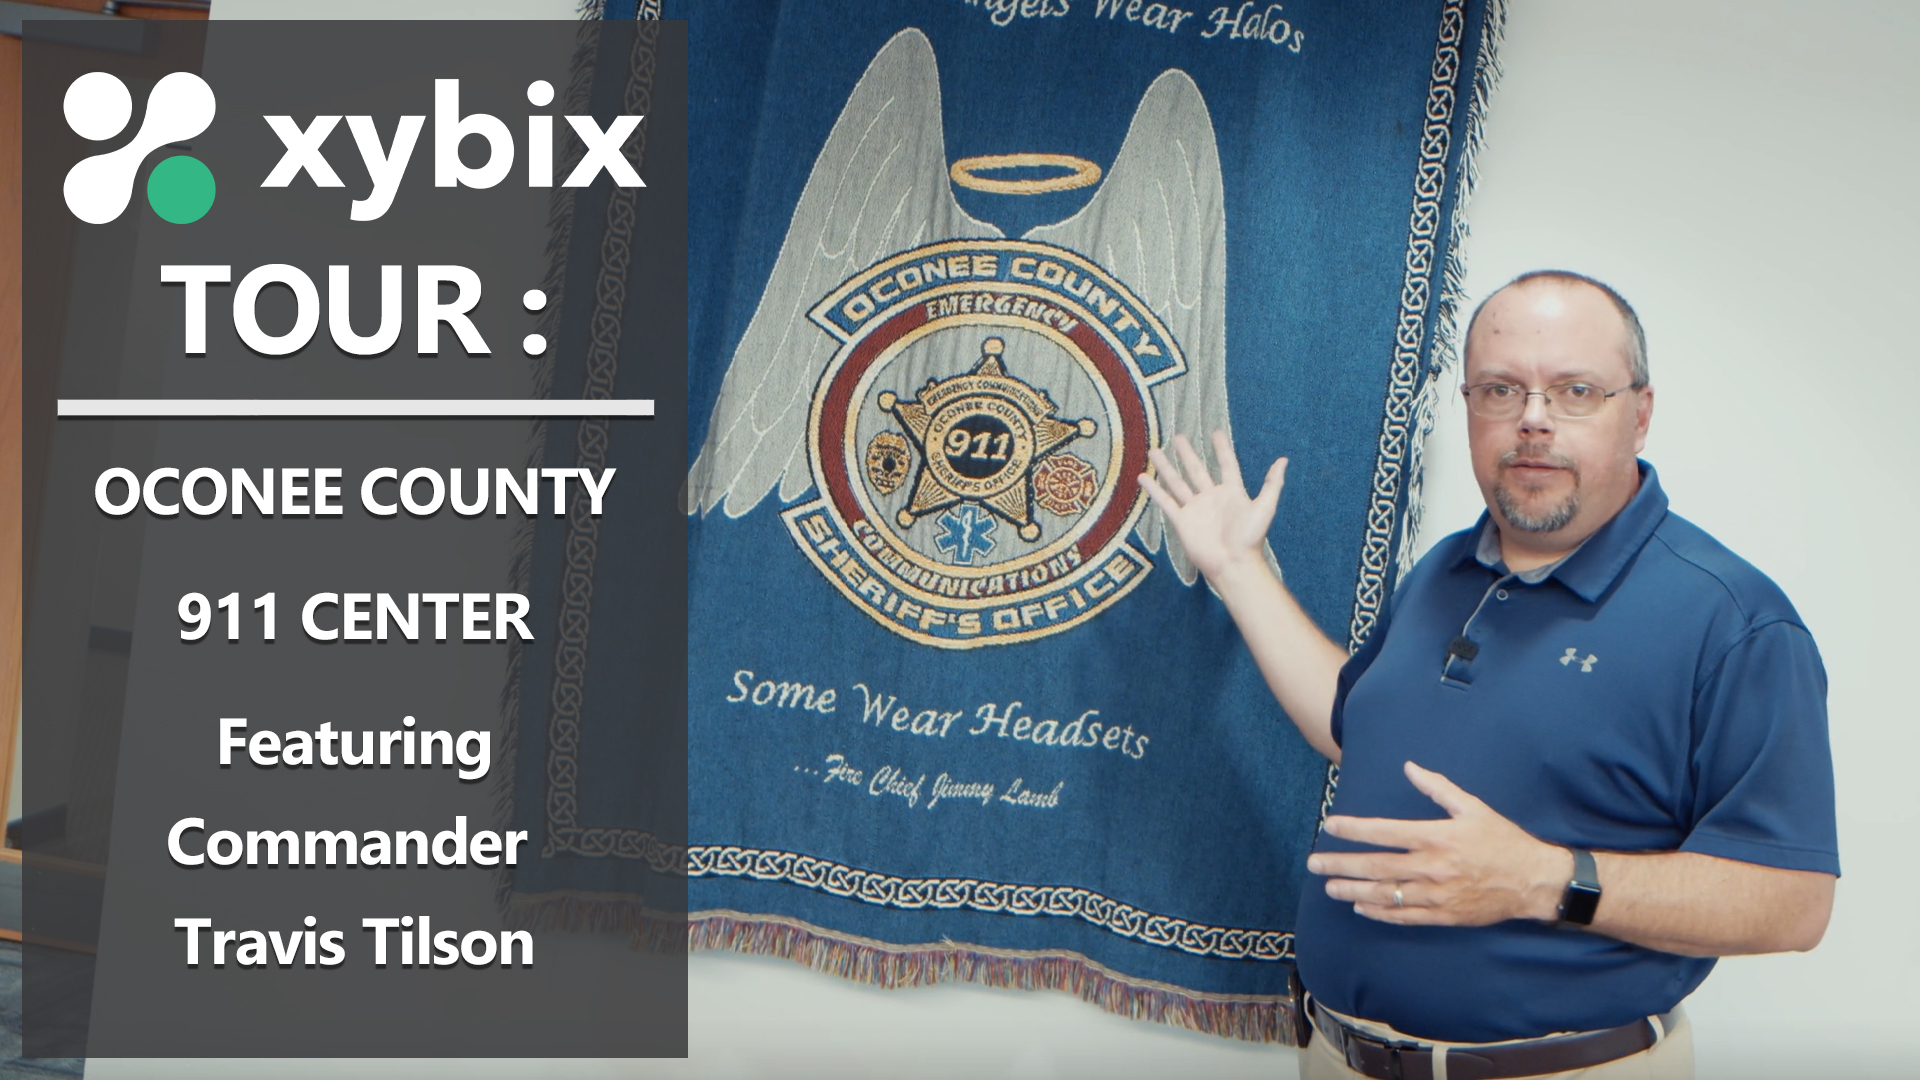 Xybix Tour of the Oconee County (SC) 911 Center featuring Com. Travis Tilson